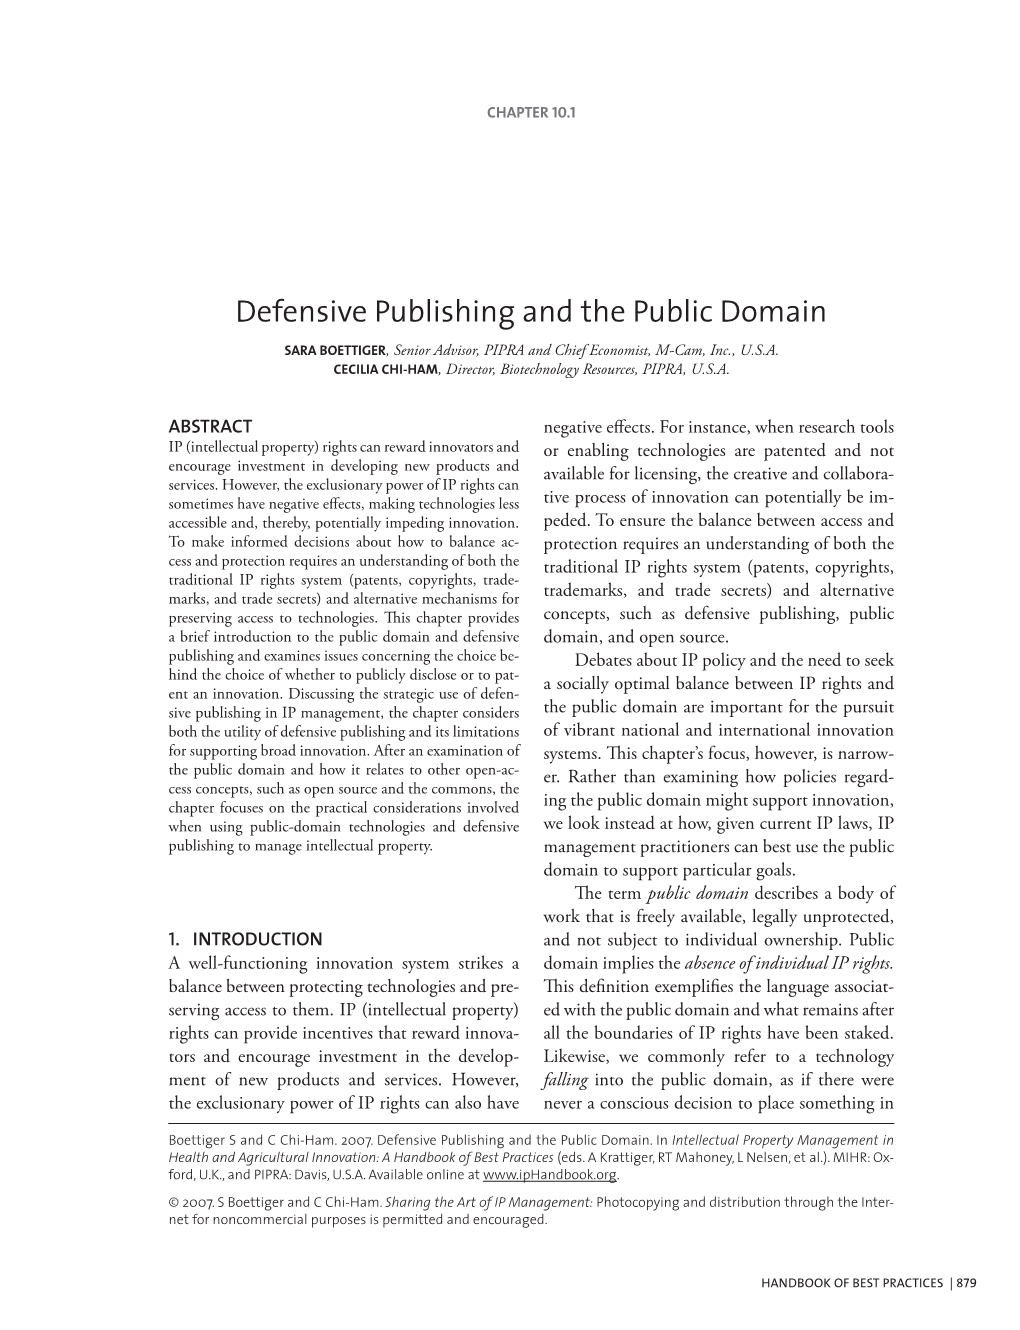 Defensive Publishing and the Public Domain Sara Boettiger, Senior Advisor, PIPRA and Chief Economist, M-Cam, Inc., U.S.A